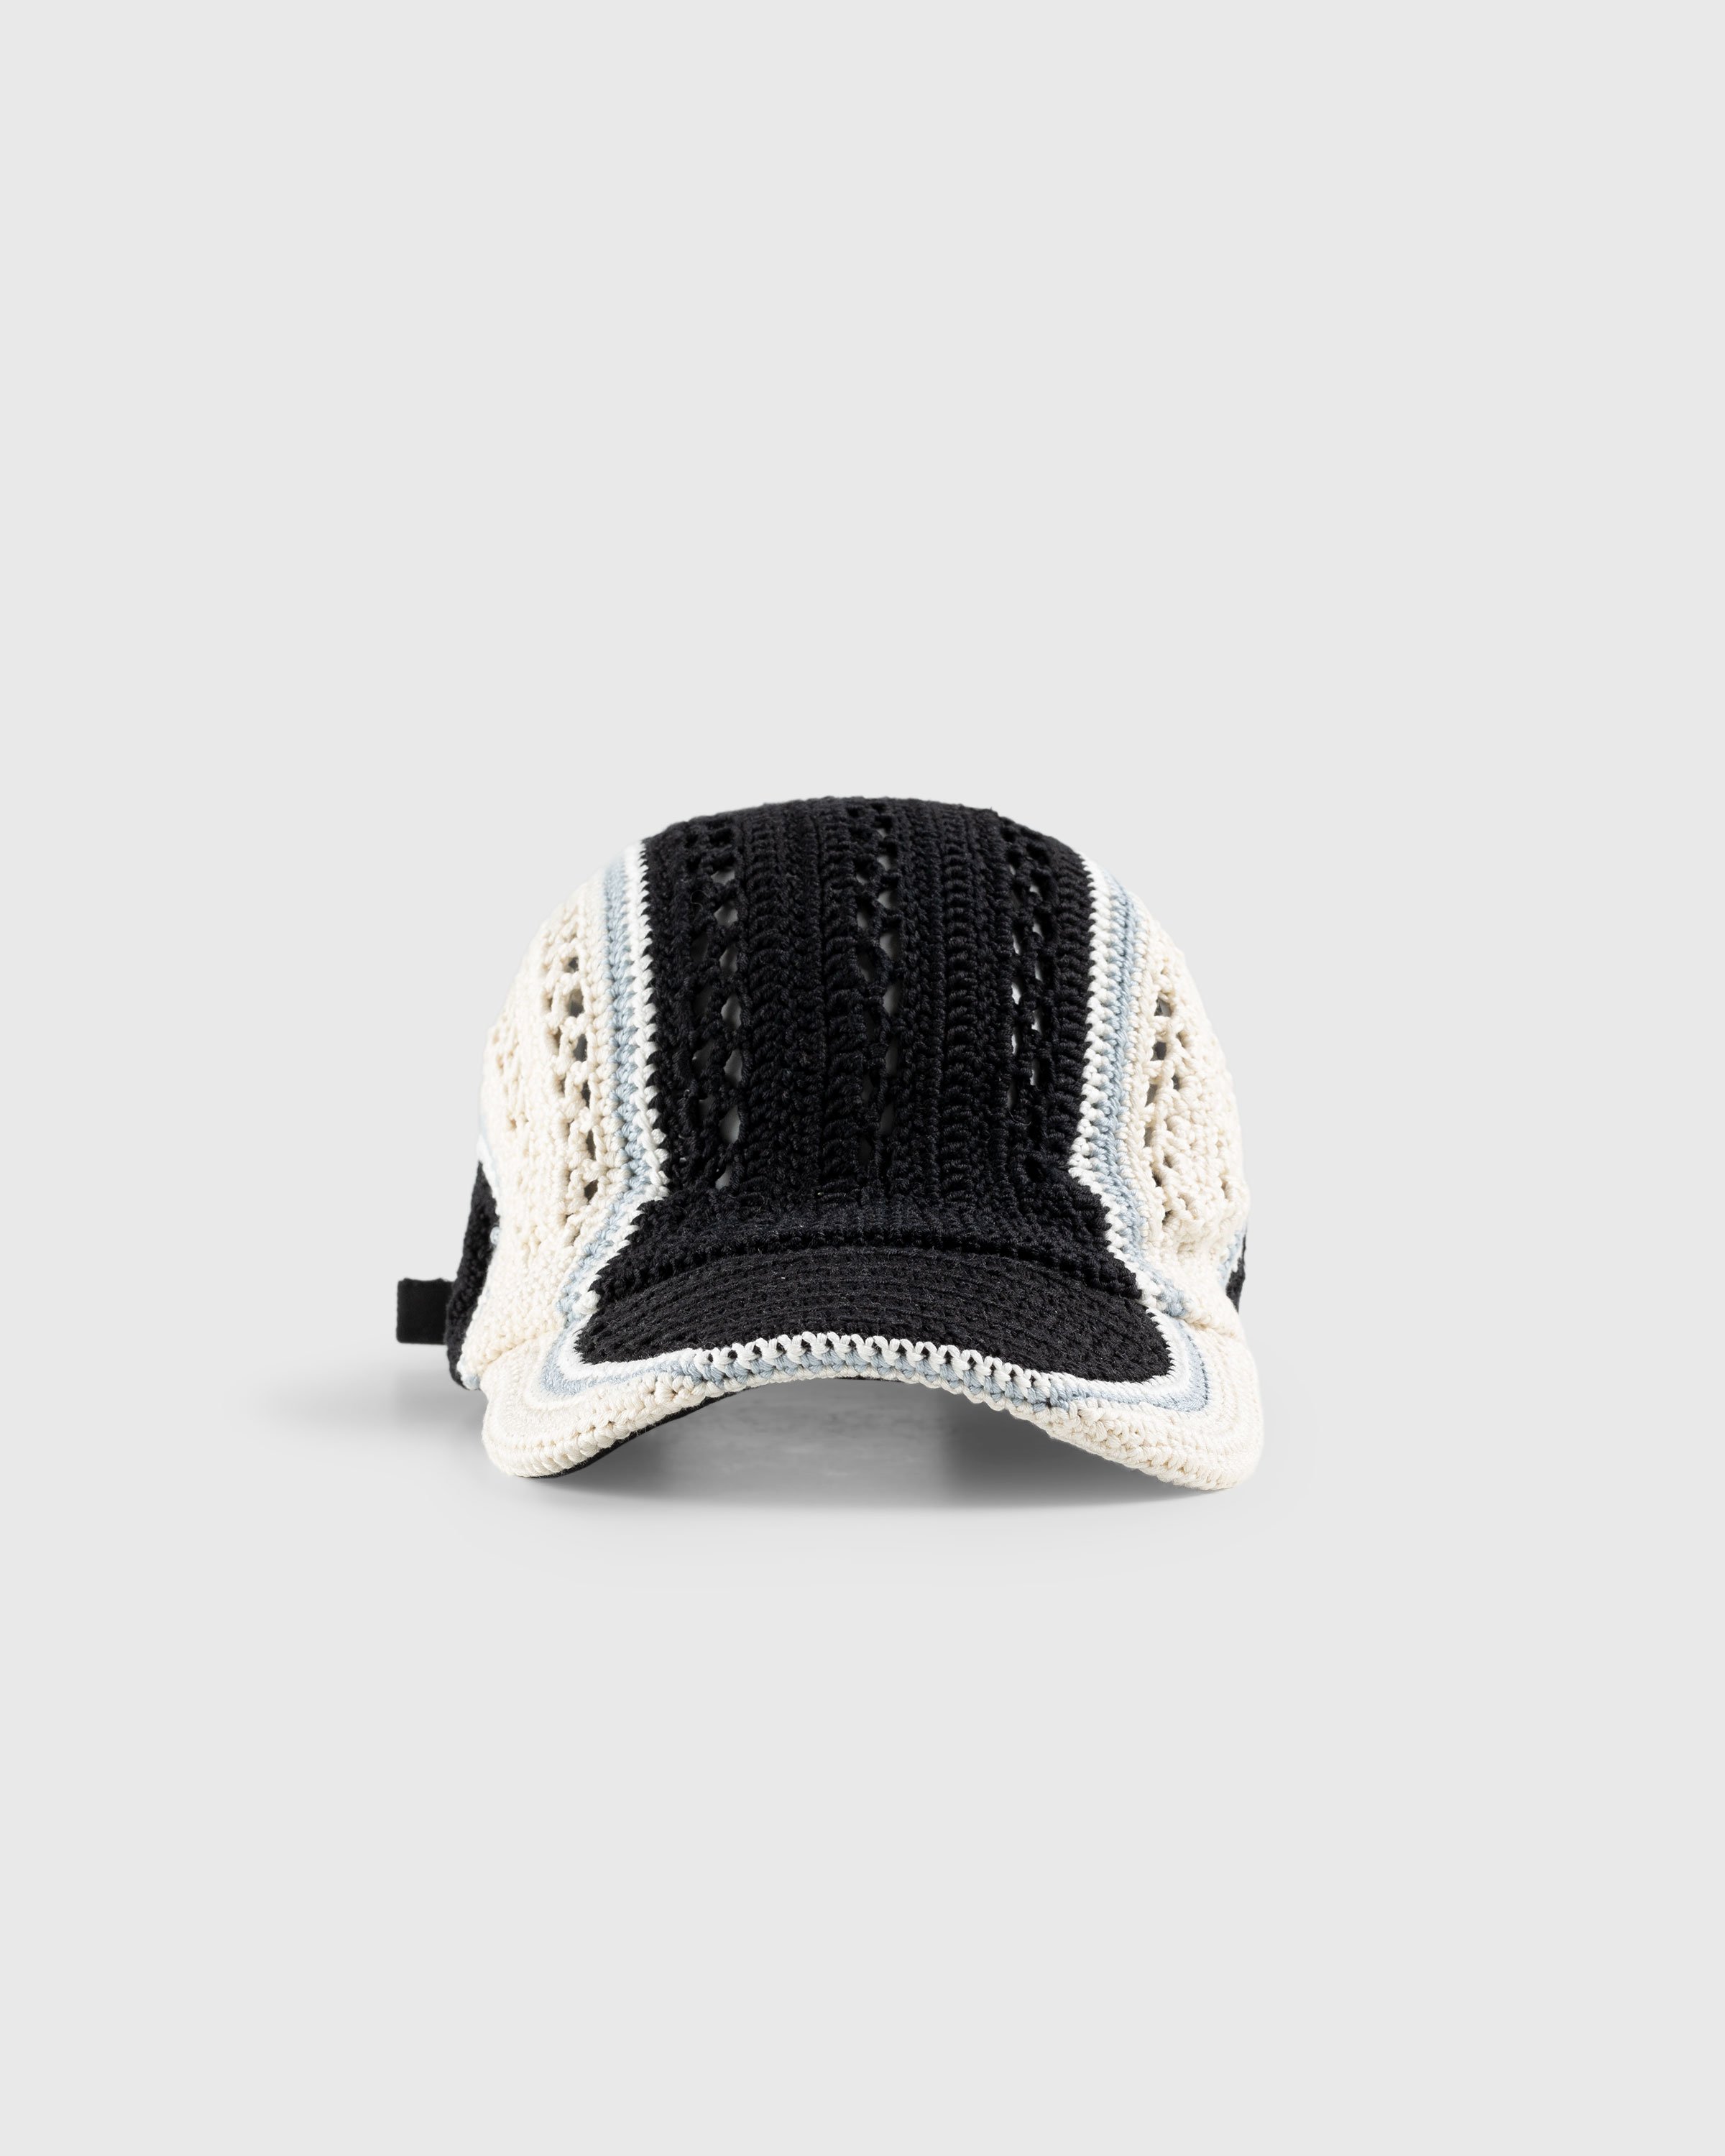 SSU - Crochet Baseball Cap Midnight Drive Black - Accessories - Black - Image 2